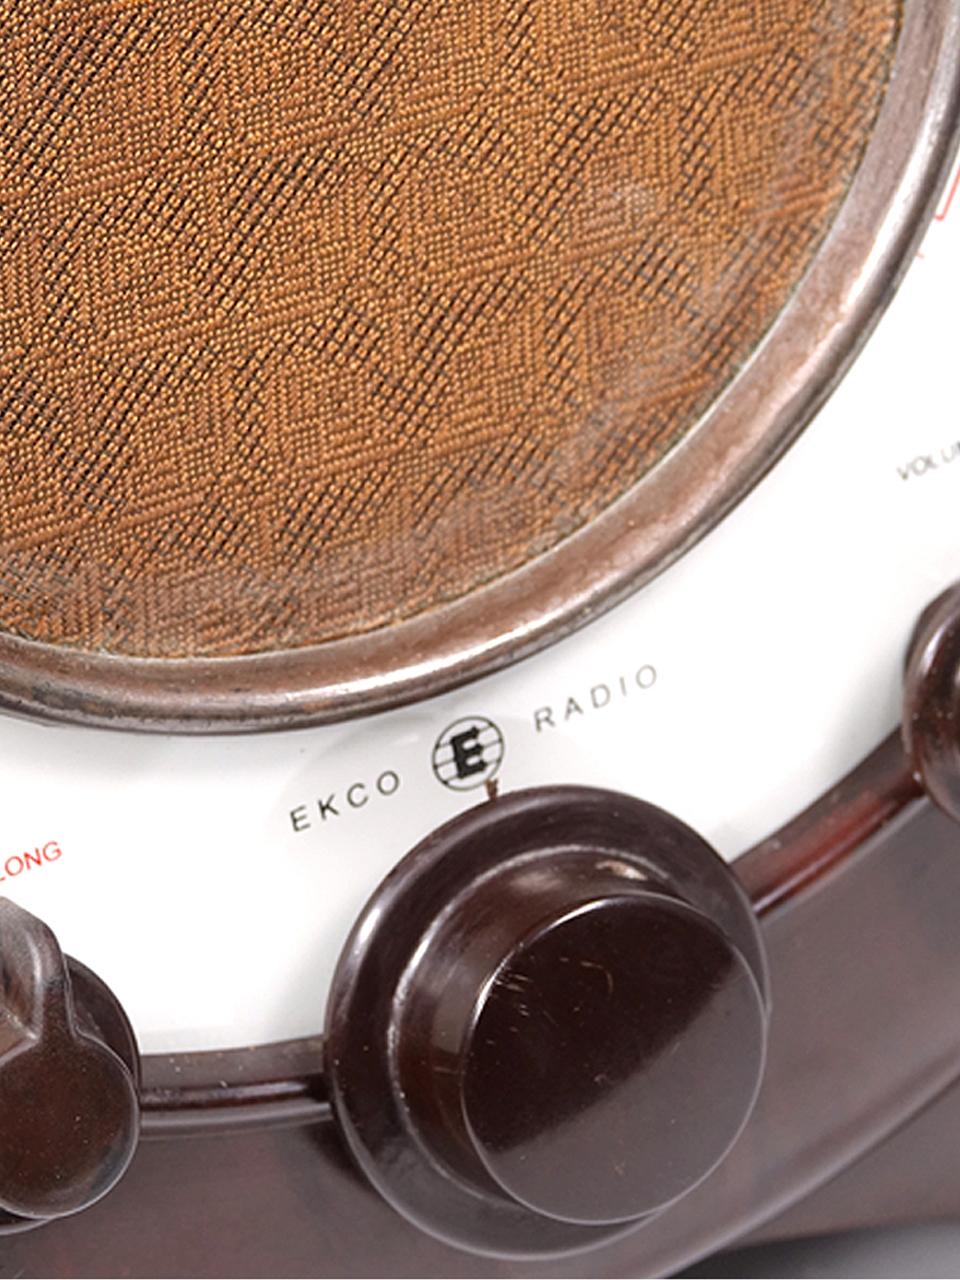 ekco a22 radio for sale